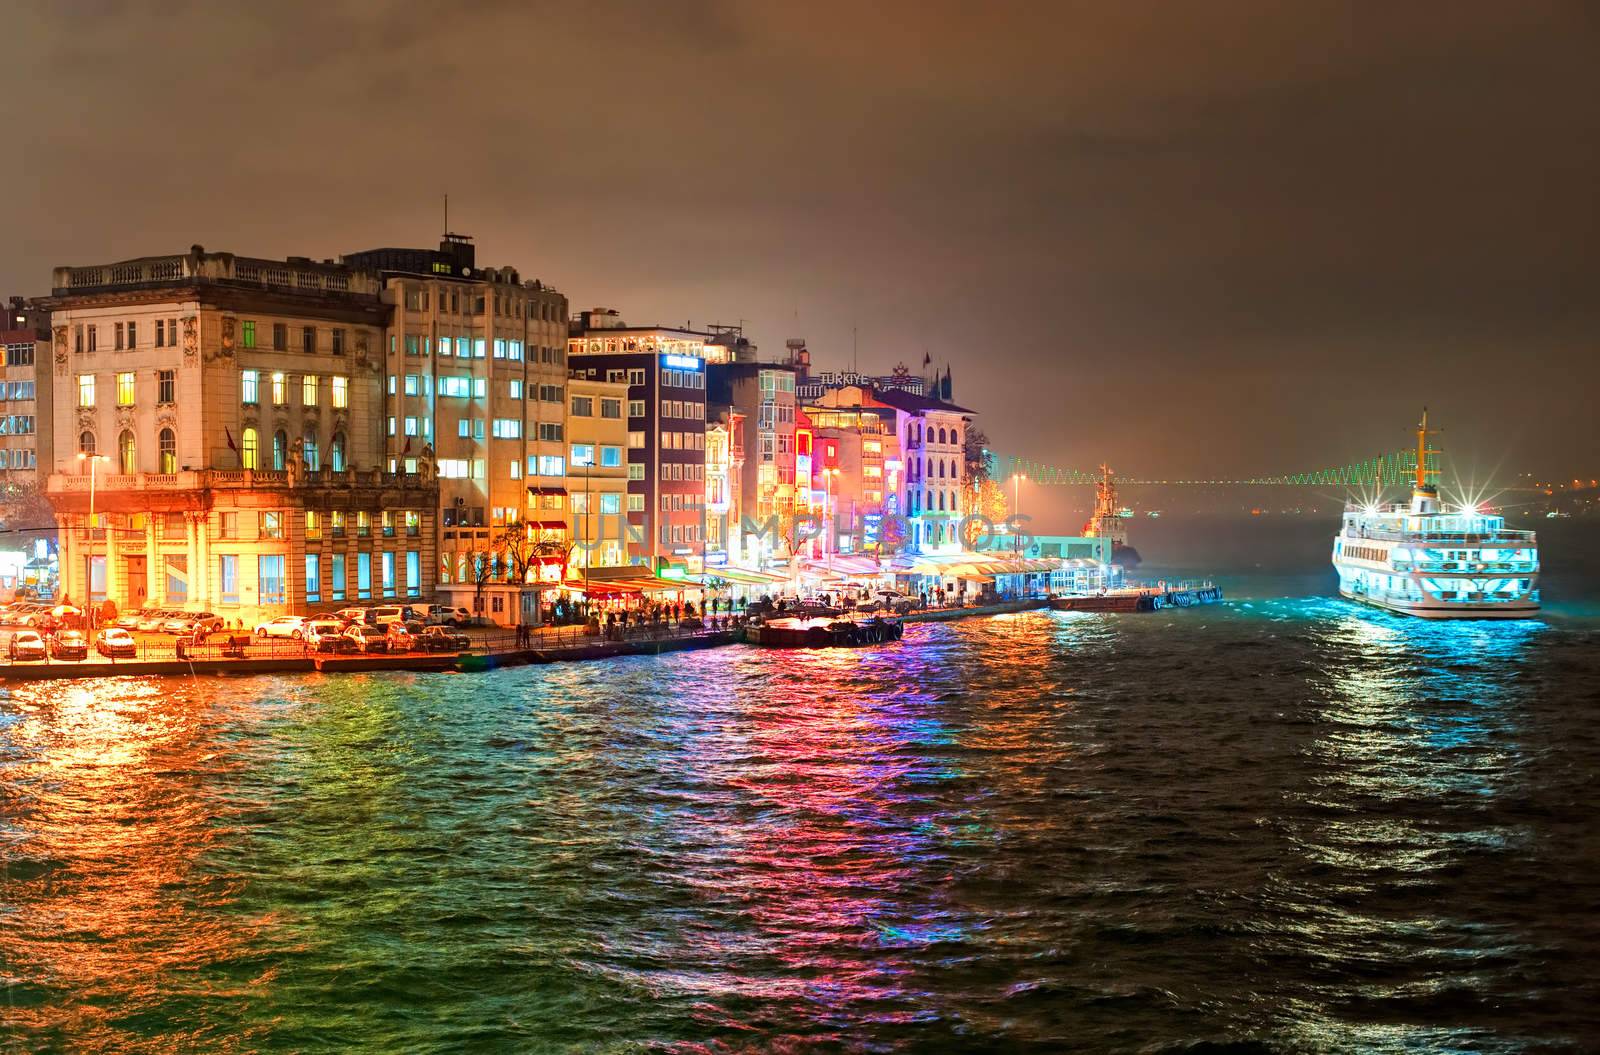 Night view of Galata quarter on Bosporus in Istanbul, Turkey by GlobePhotos